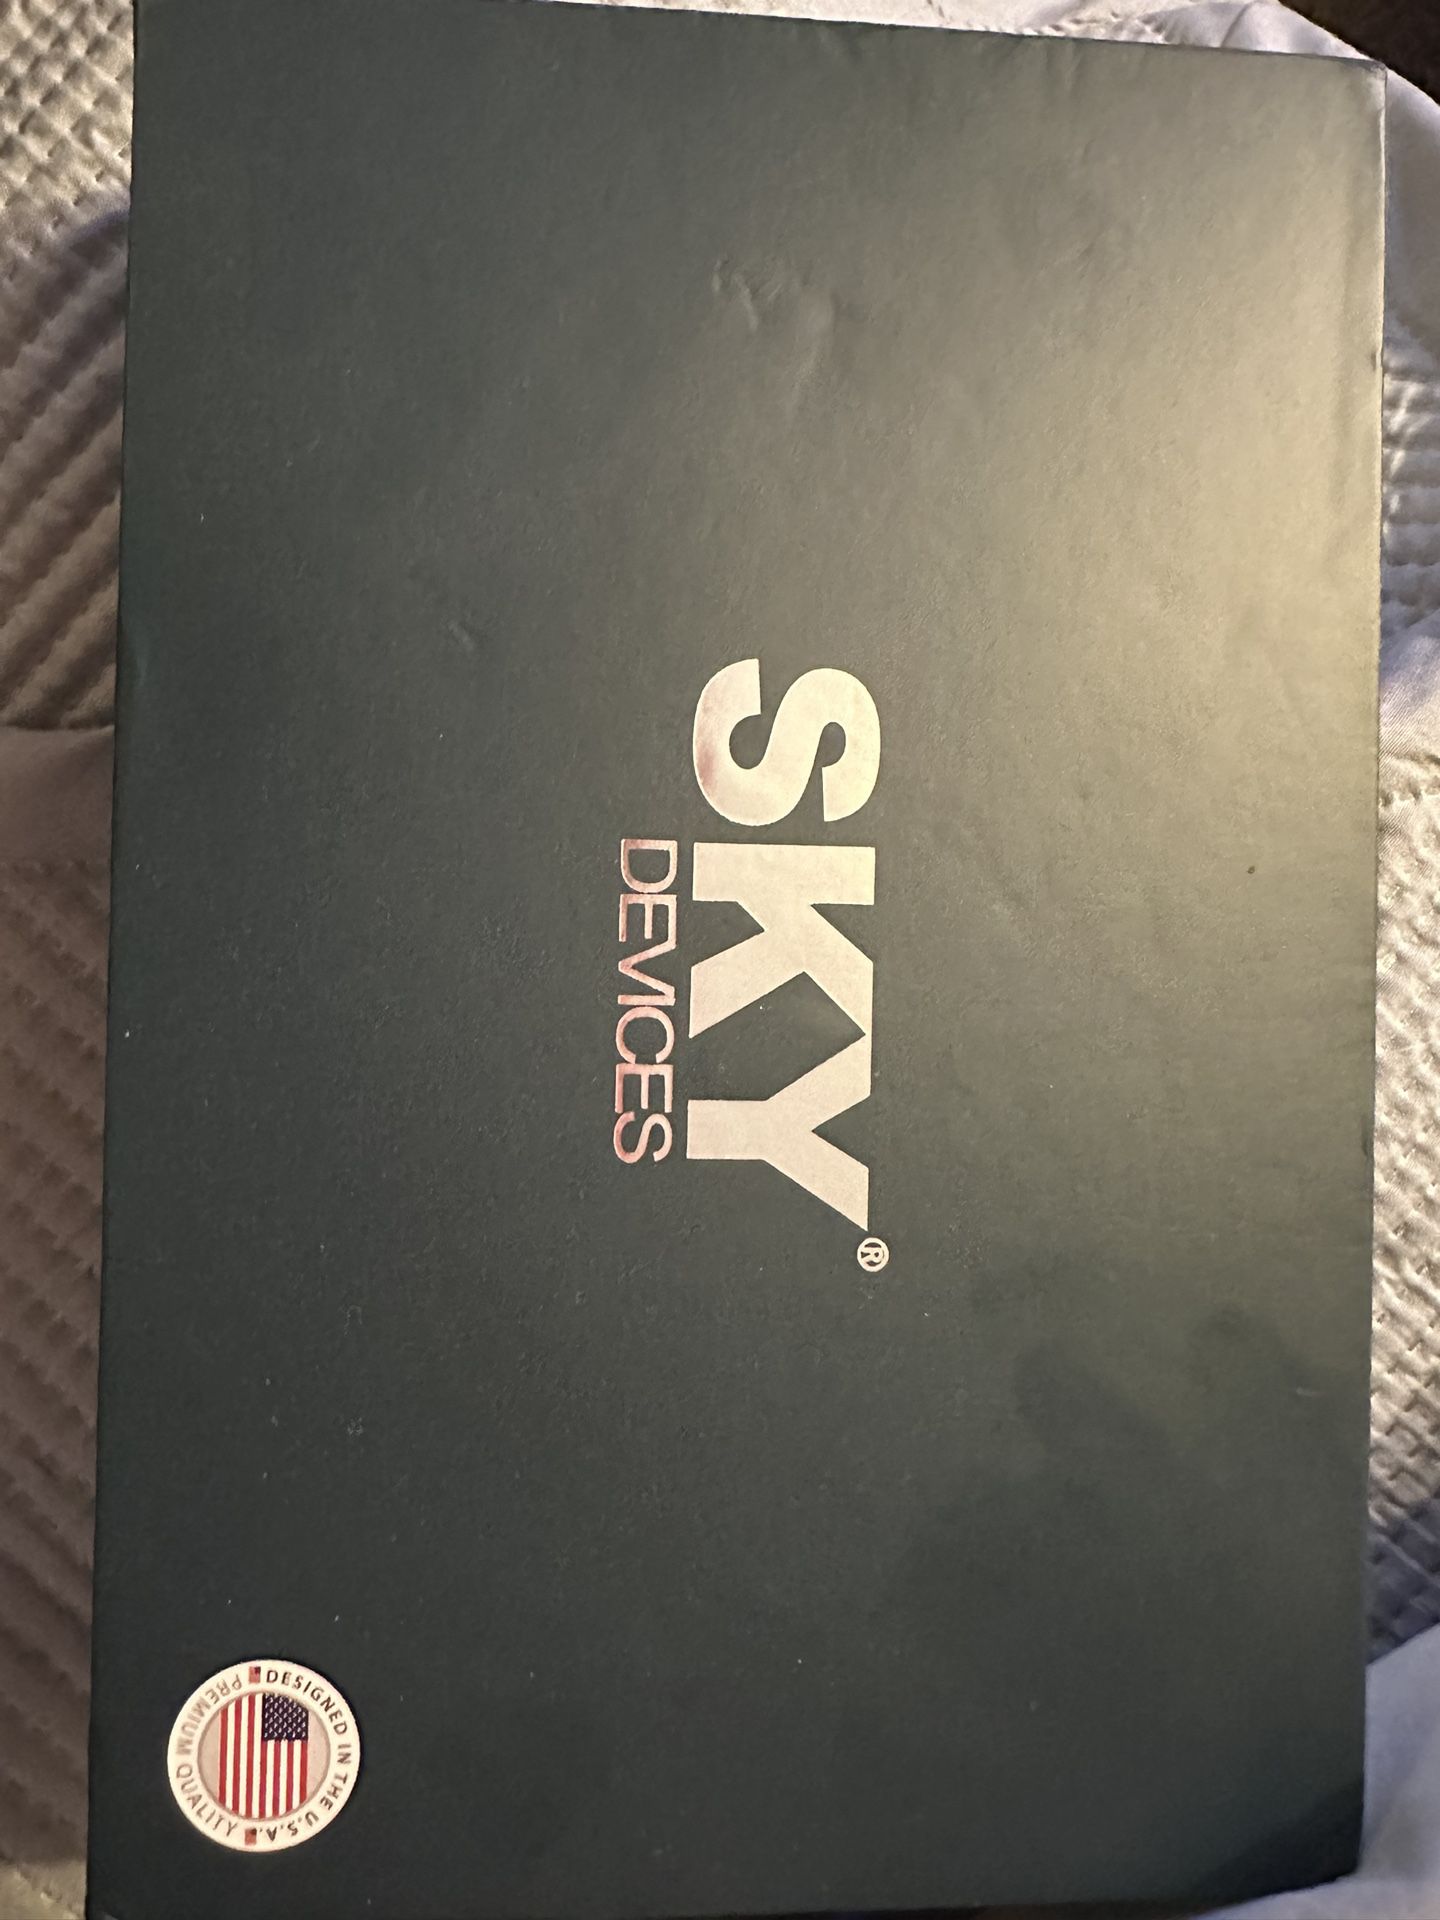 Sky Pad Pro 8 